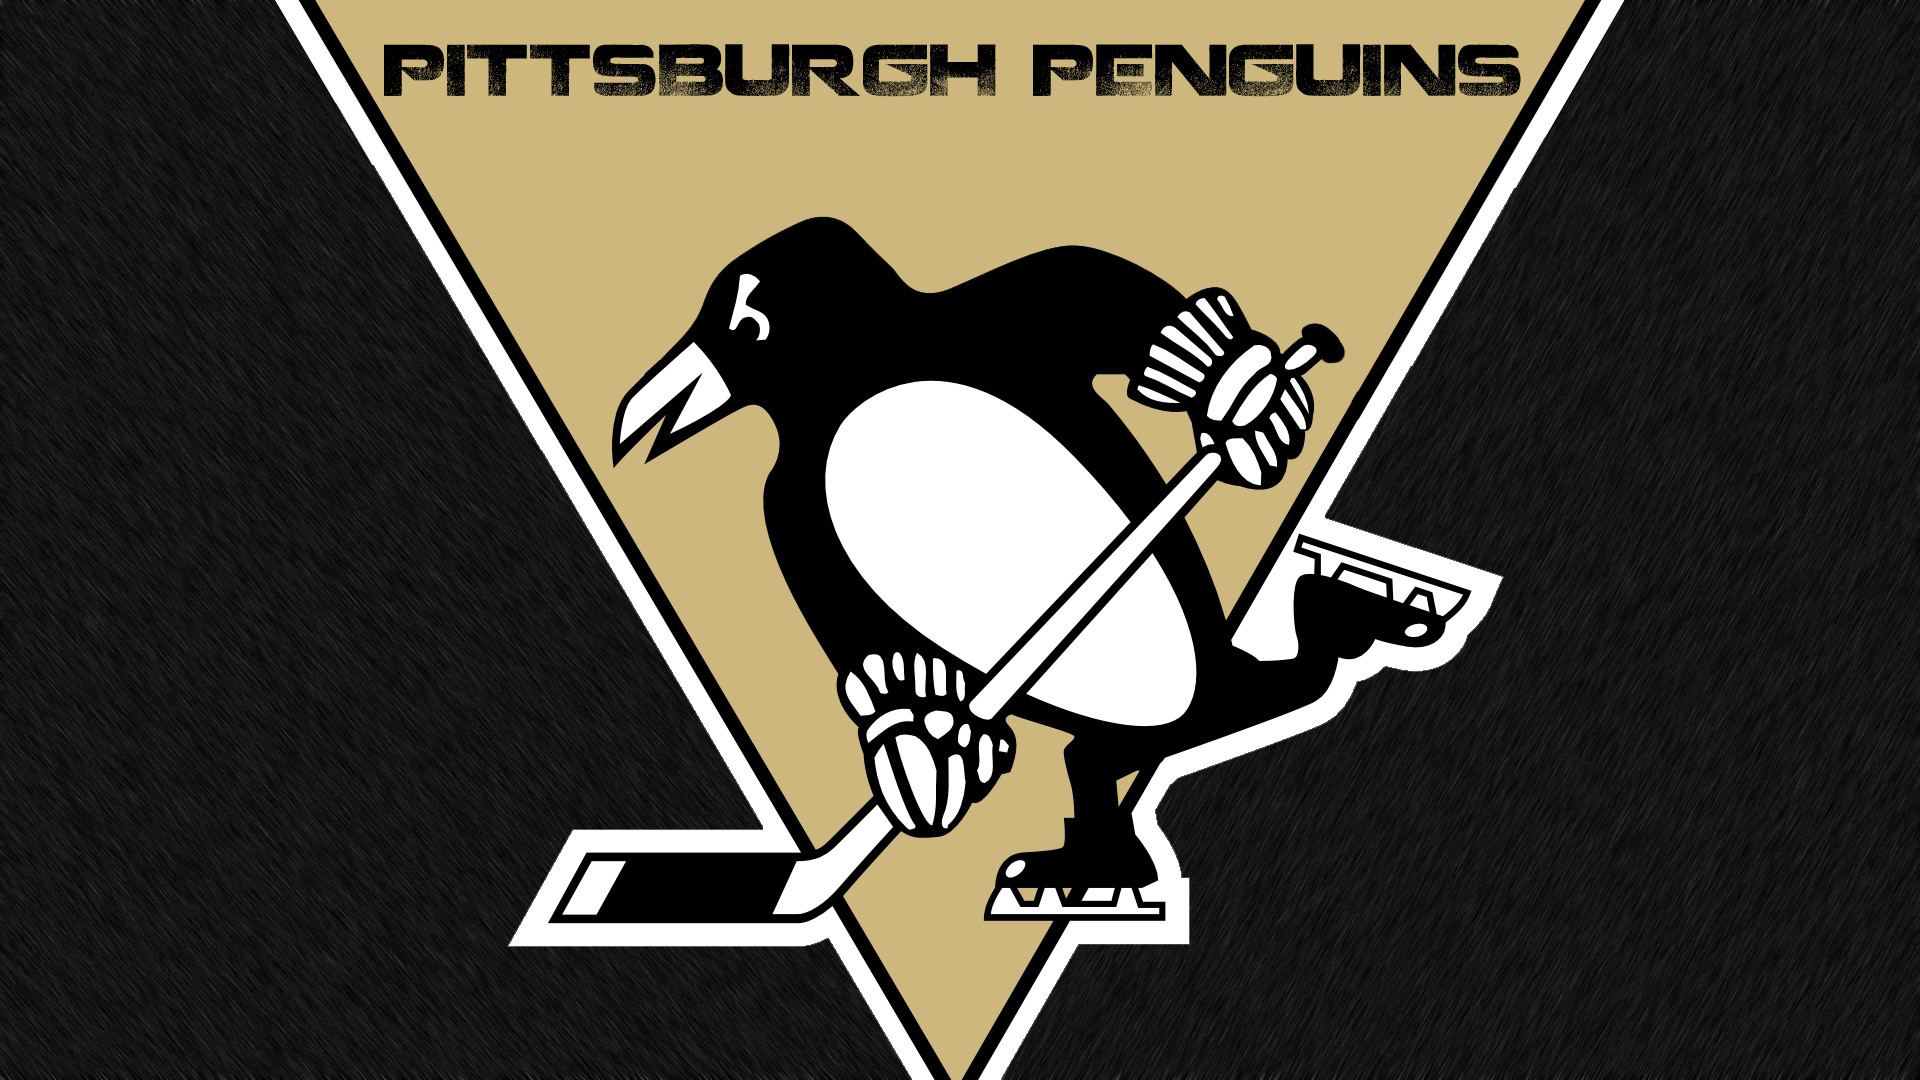 Хк питтсбург. НХЛ Питтсбург Пингвинз. Хоккейная команда Питтсбург. Питтсбург Пингвинз логотип. НХЛ Пингвинз Питтсбург команда.